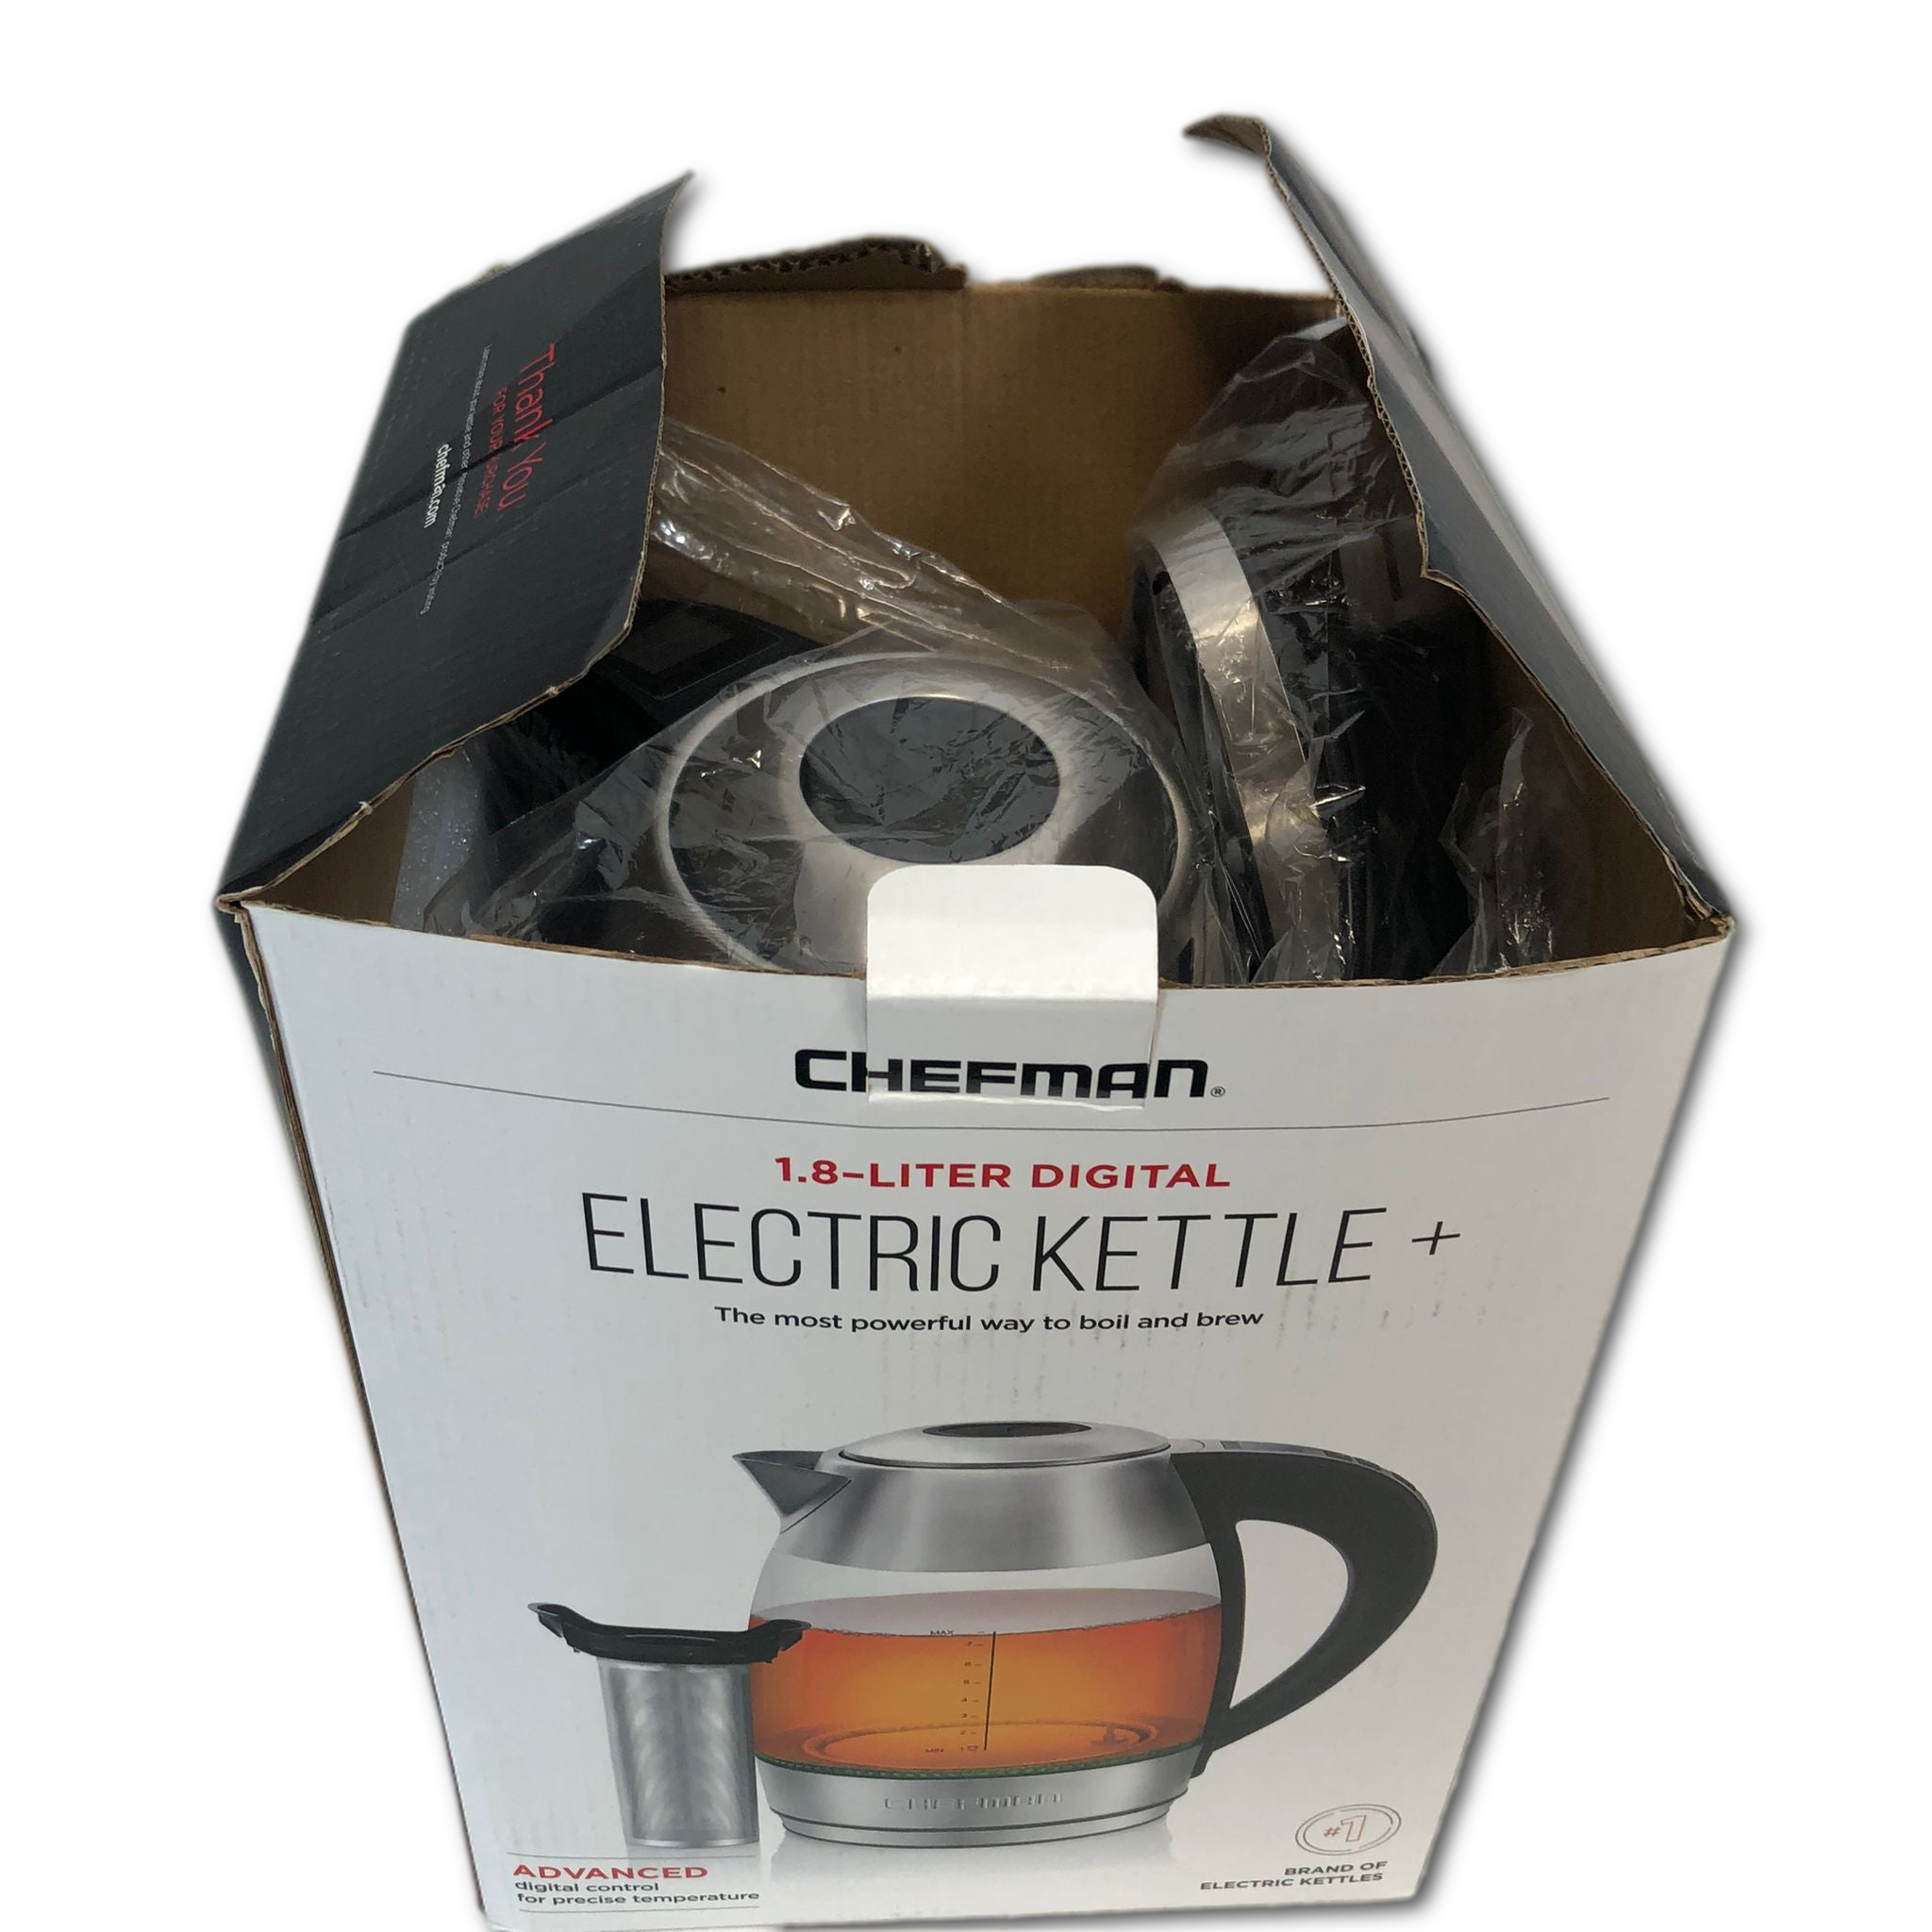 Chefman 1.8L Digital Precision Electric Kettle w/ Tea Infuser